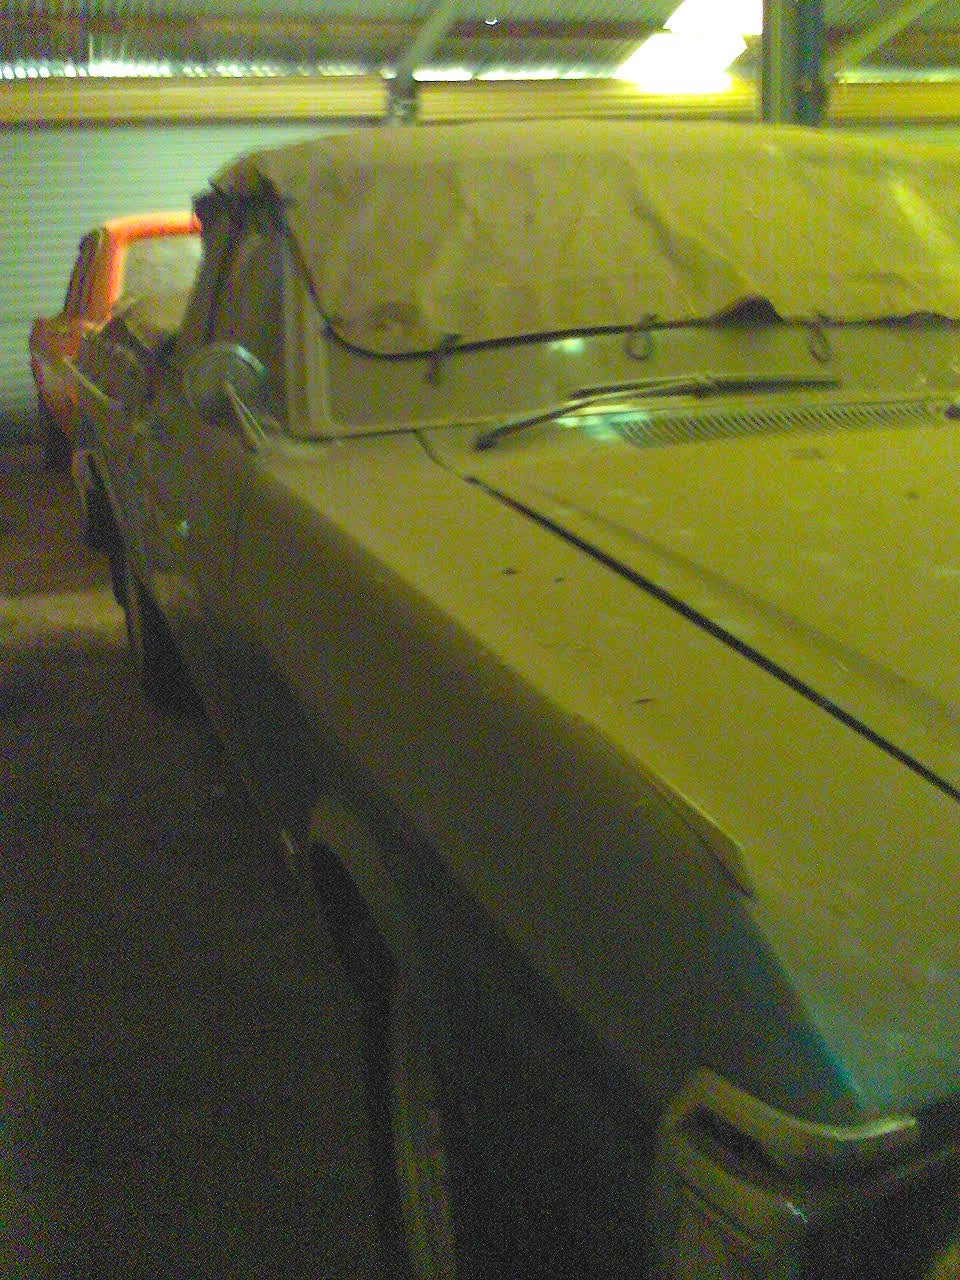 1969 Ford Falcon GTHO Lookalike